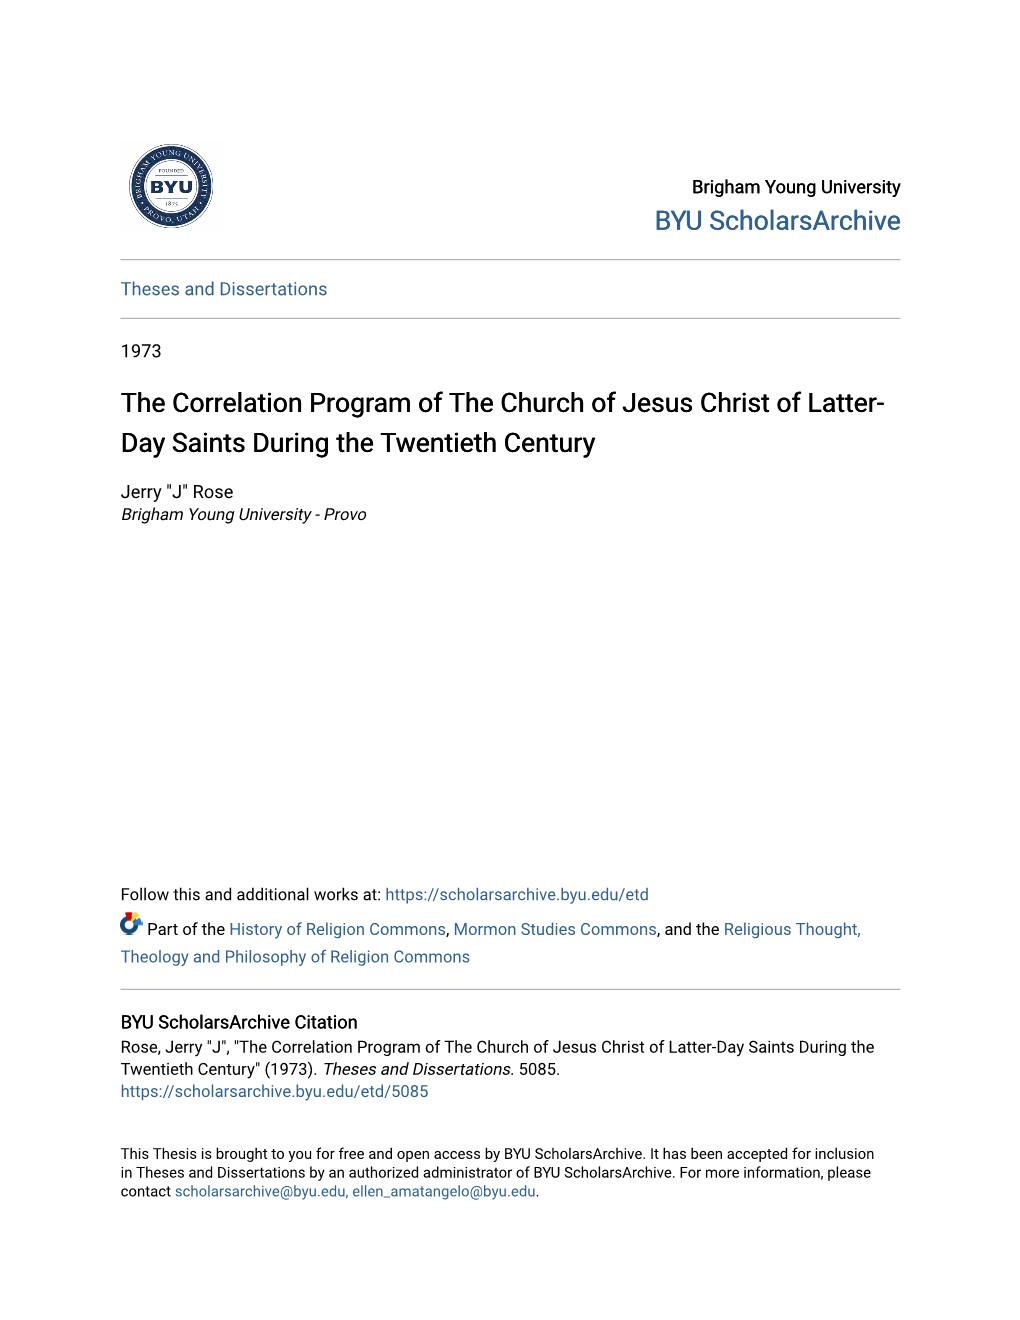 The Correlation Program of the Church of Jesus Christ of Latter-Day Saints During the Twentieth Century" (1973)